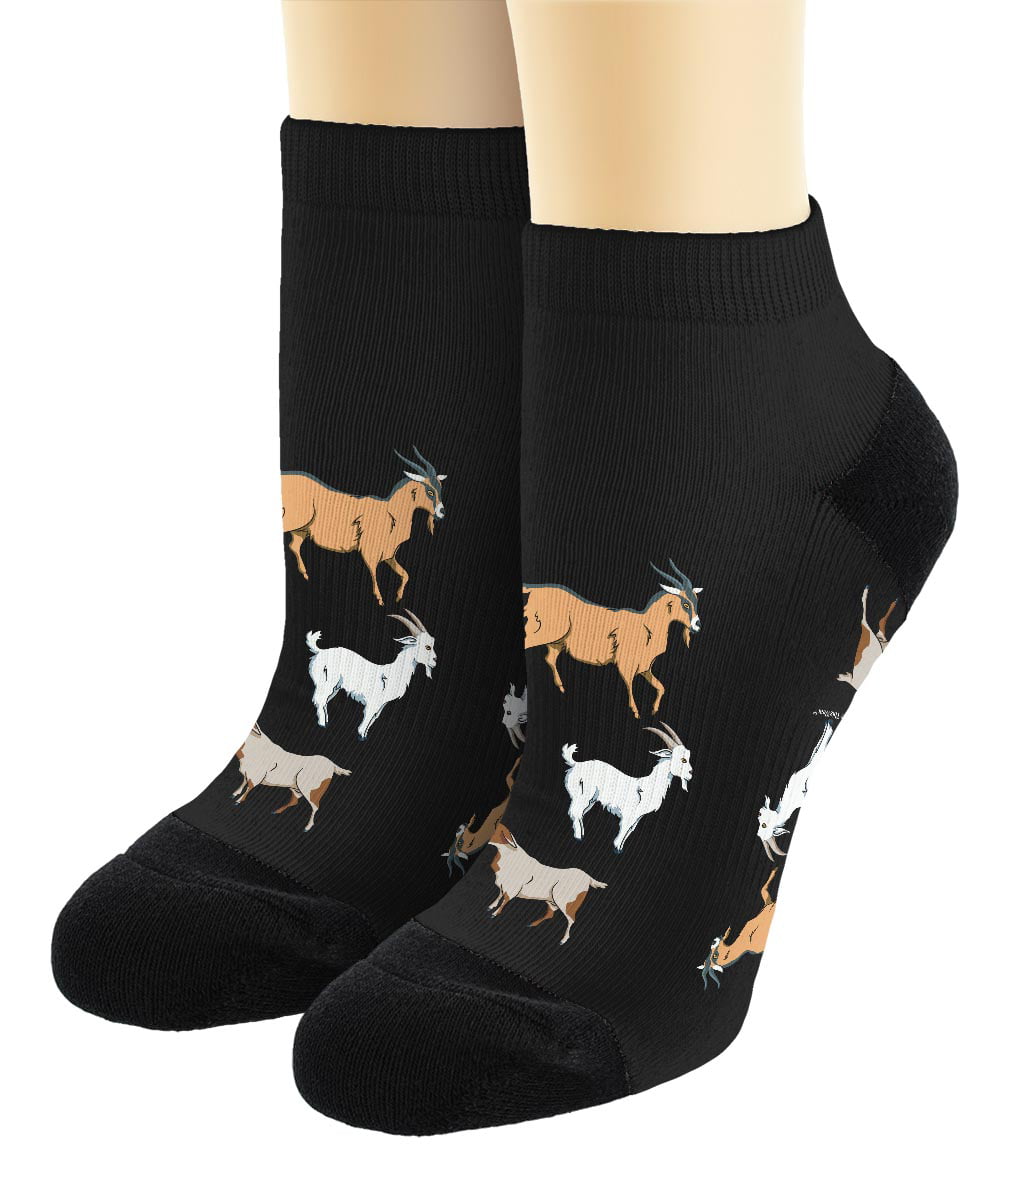 Goats Digital Art Personality Fashion Casual Polyester Socks 